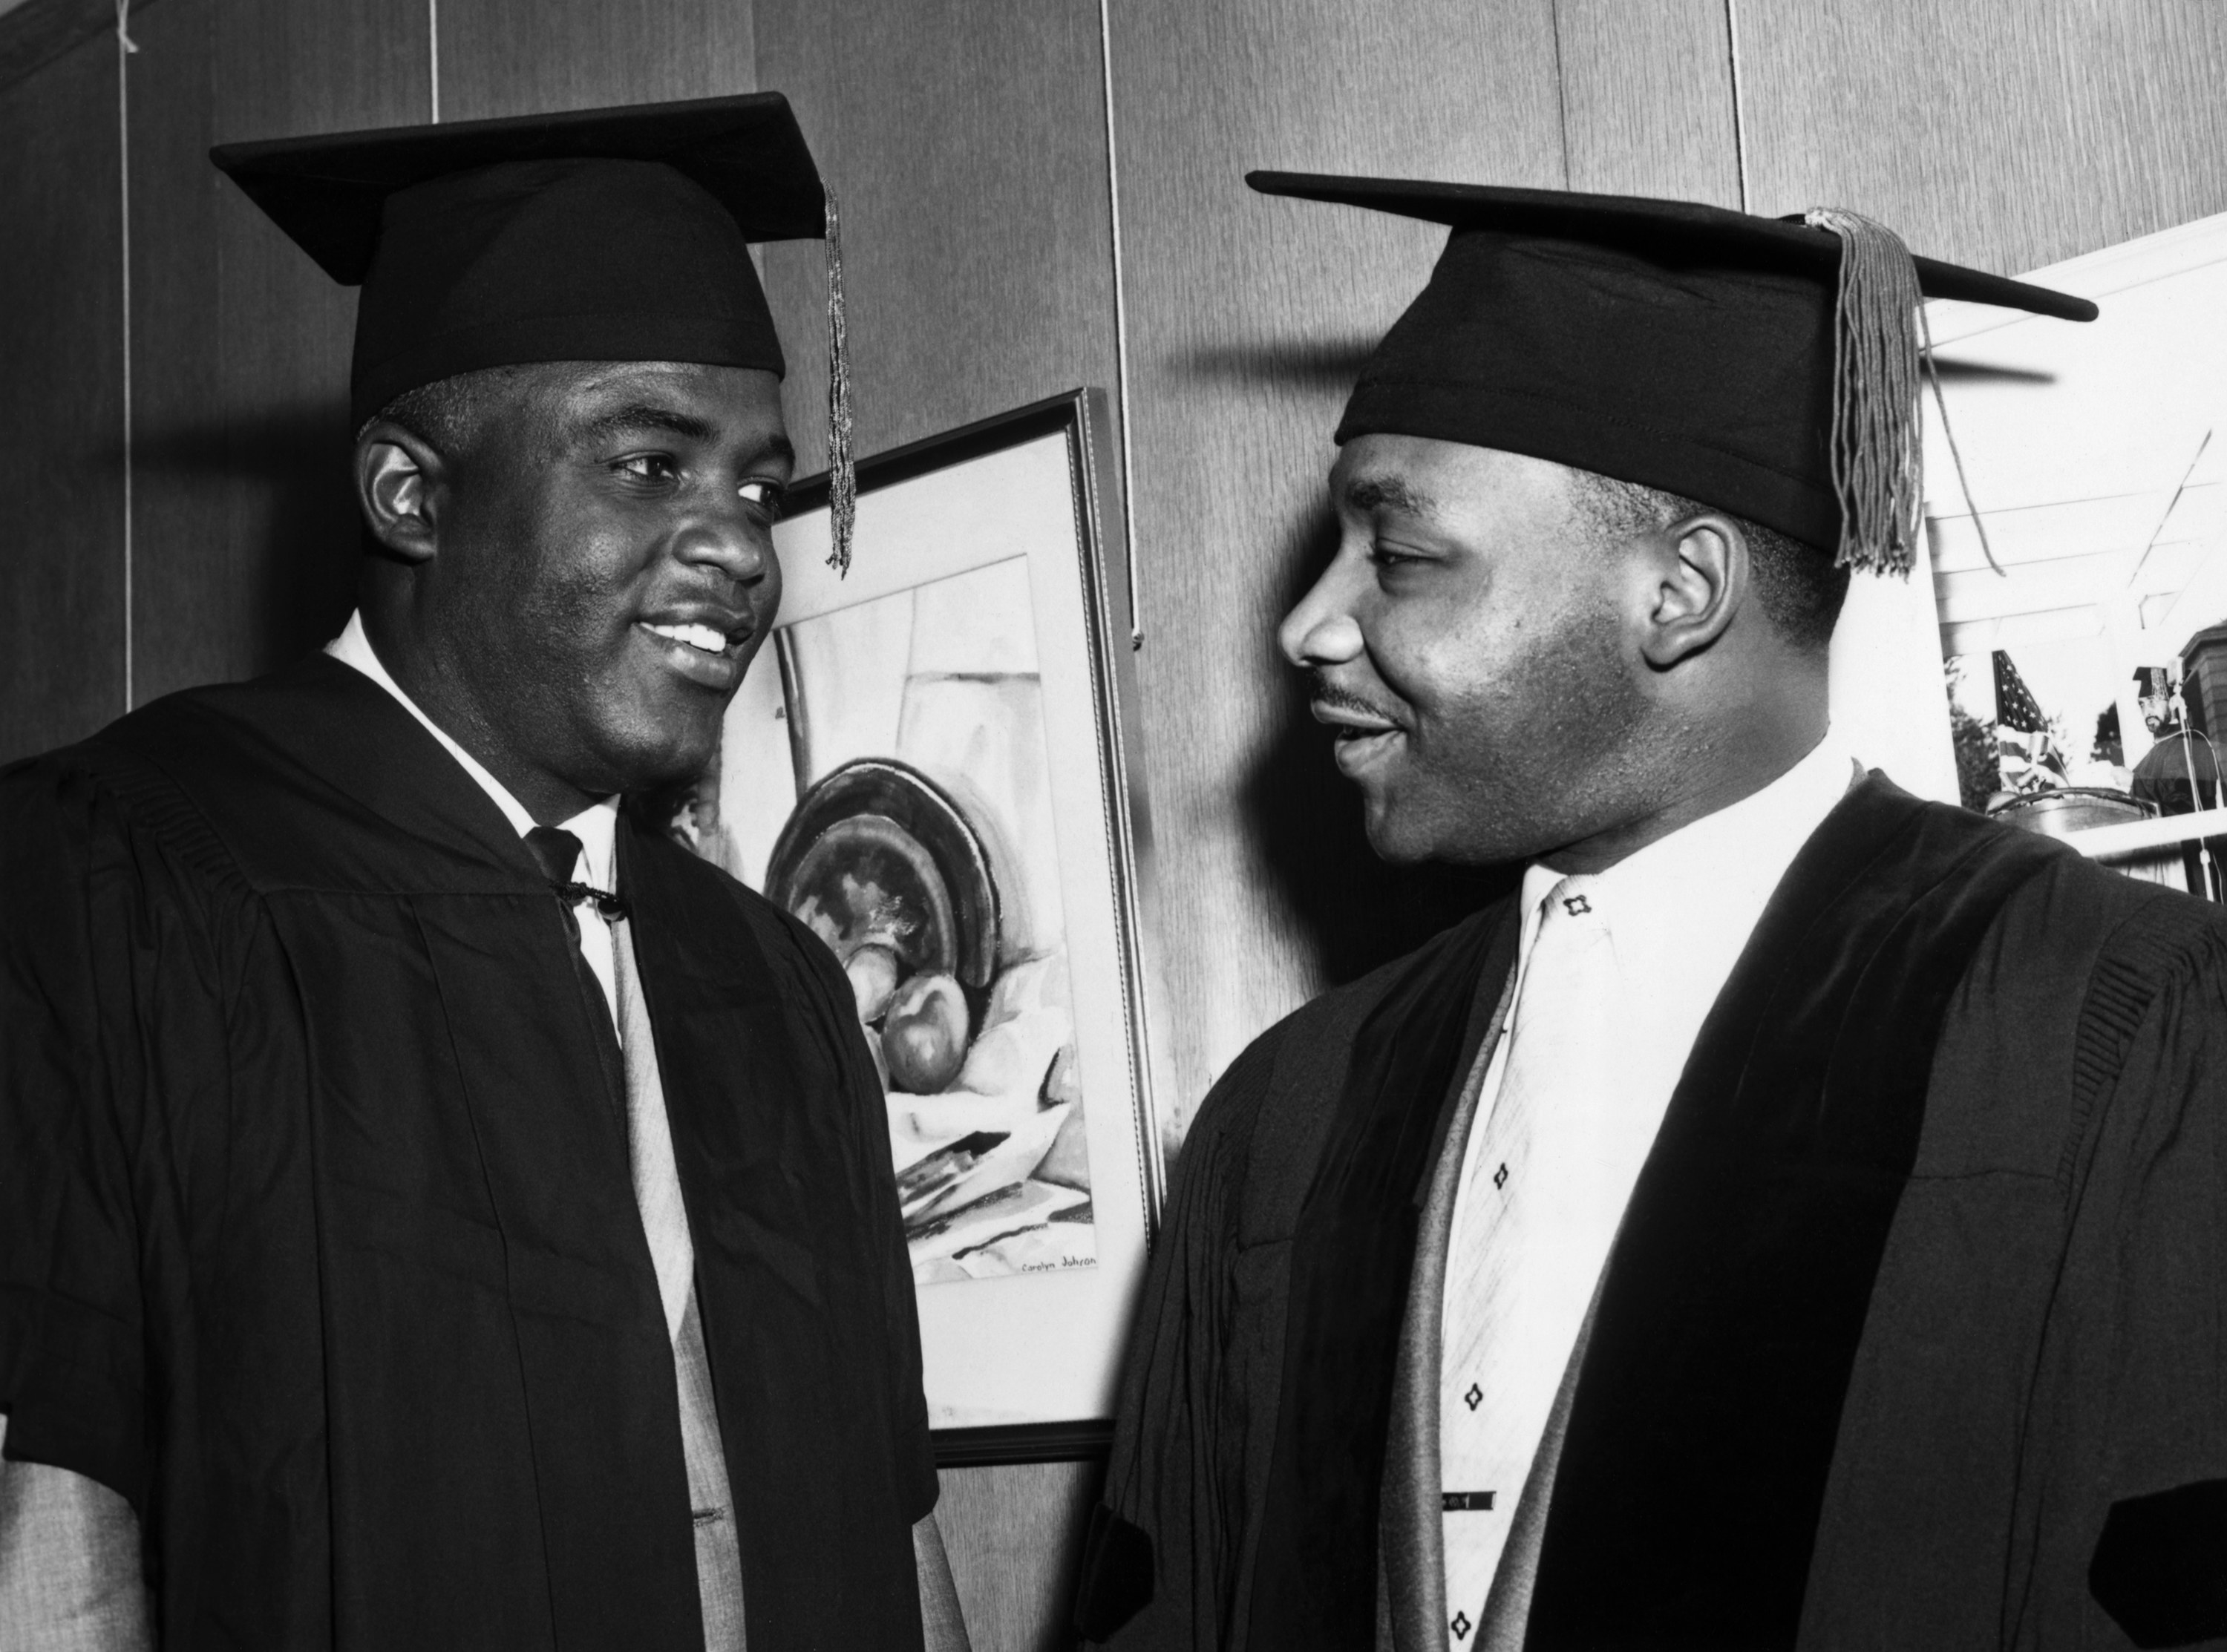 Dr. King graduating